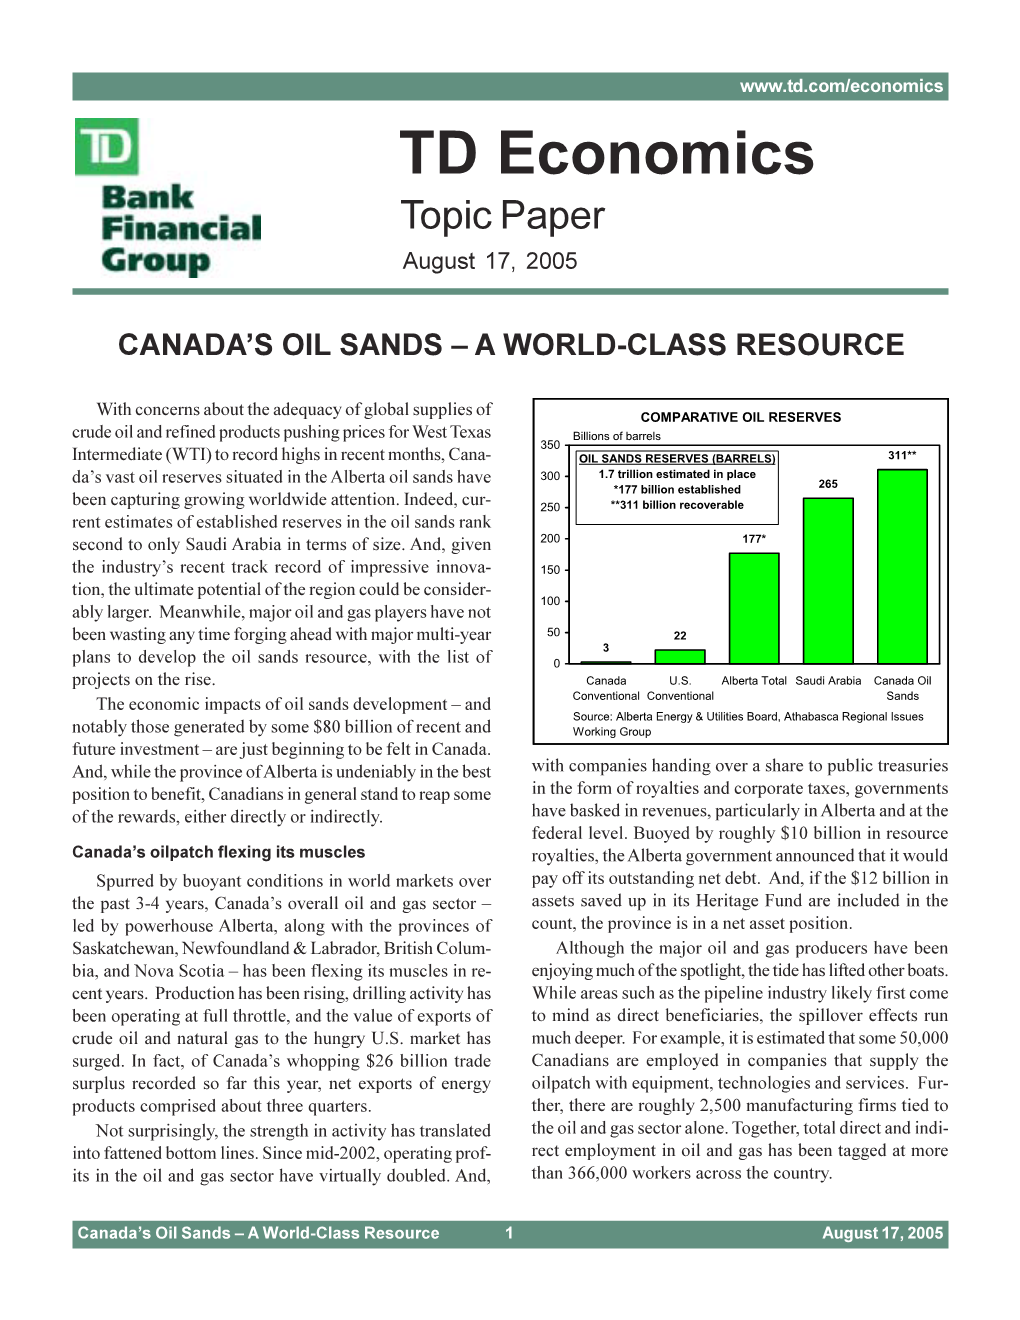 TD Economics Topic Paper August 17, 2005